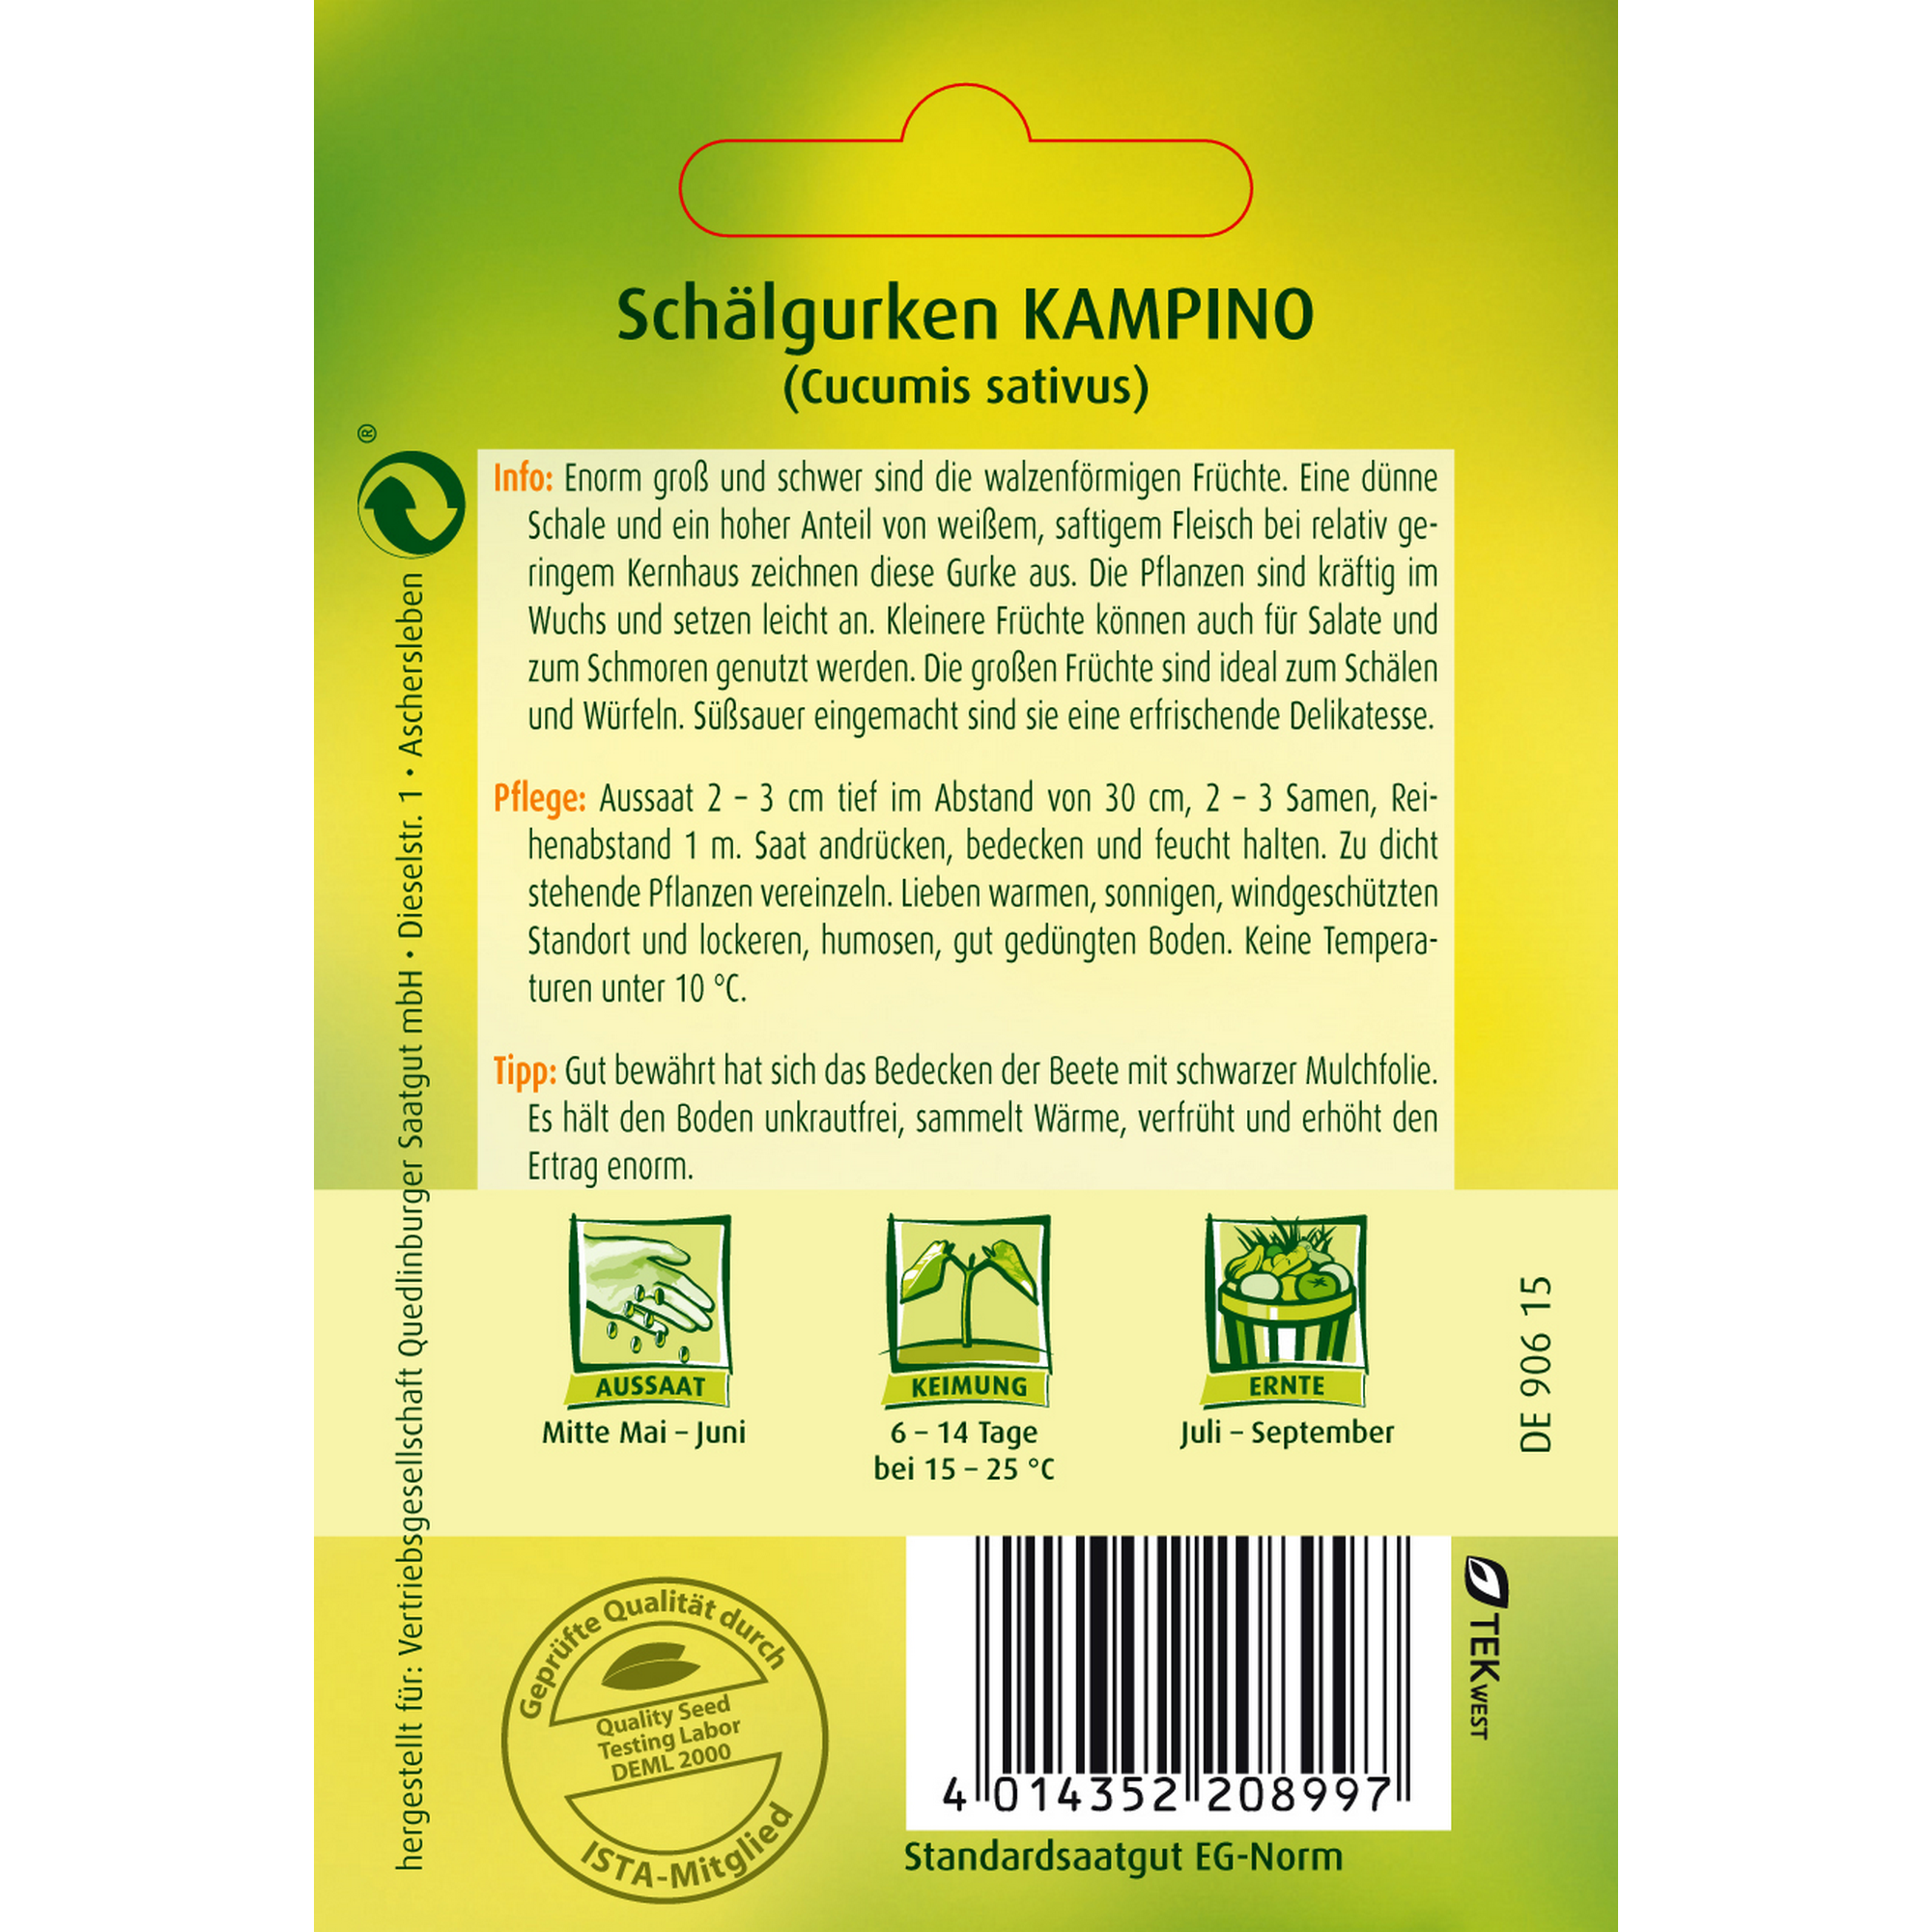 Schälgurke 'Kampino' + product picture